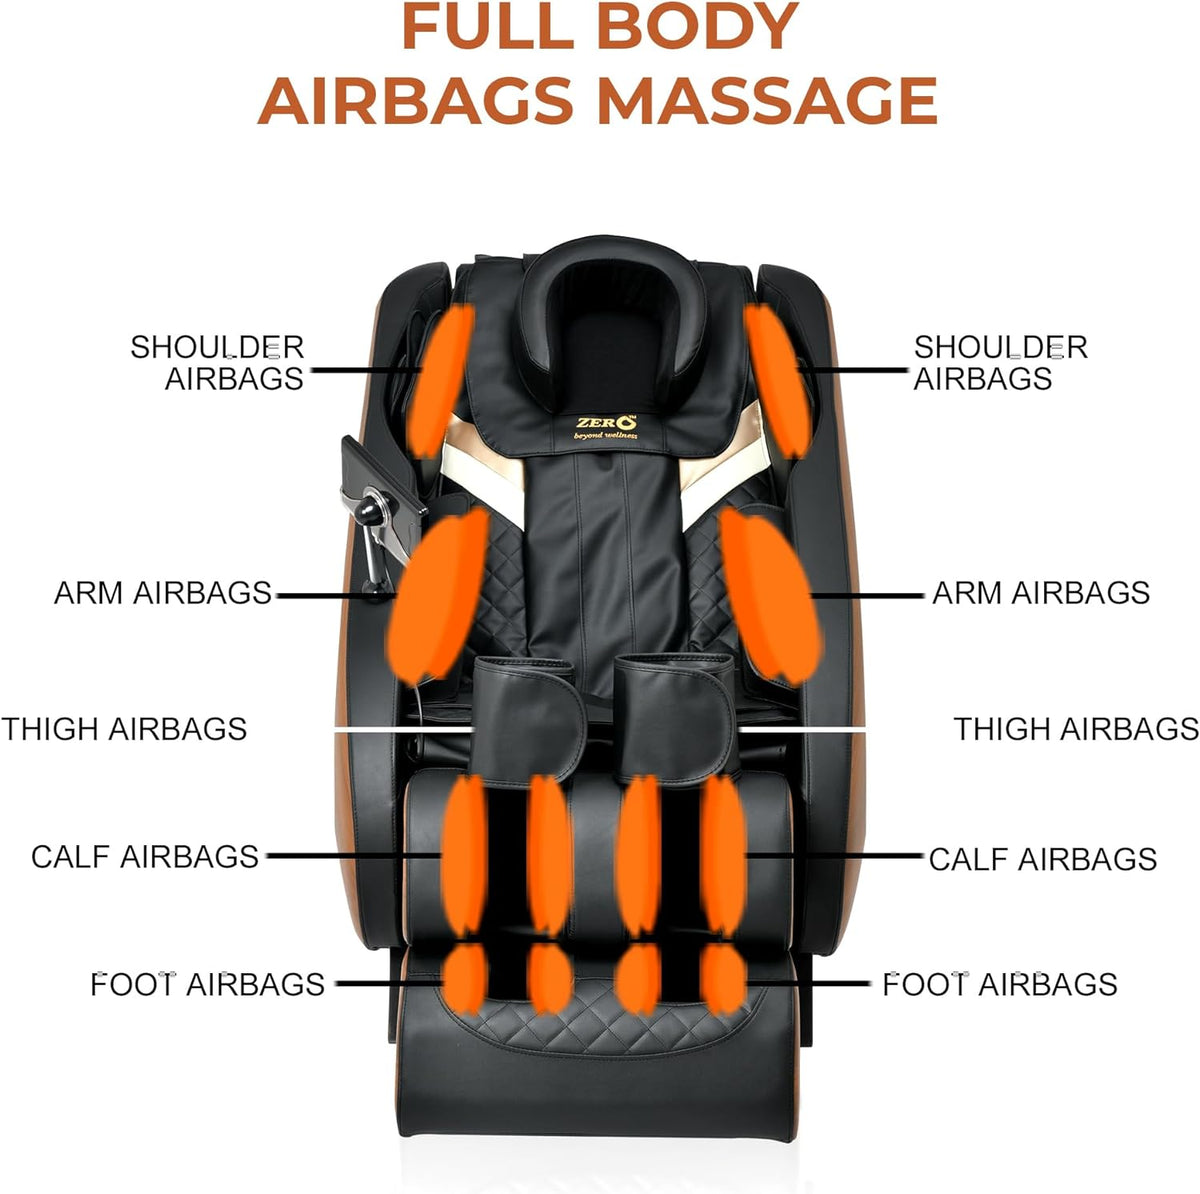 U-Classic Massage Chair